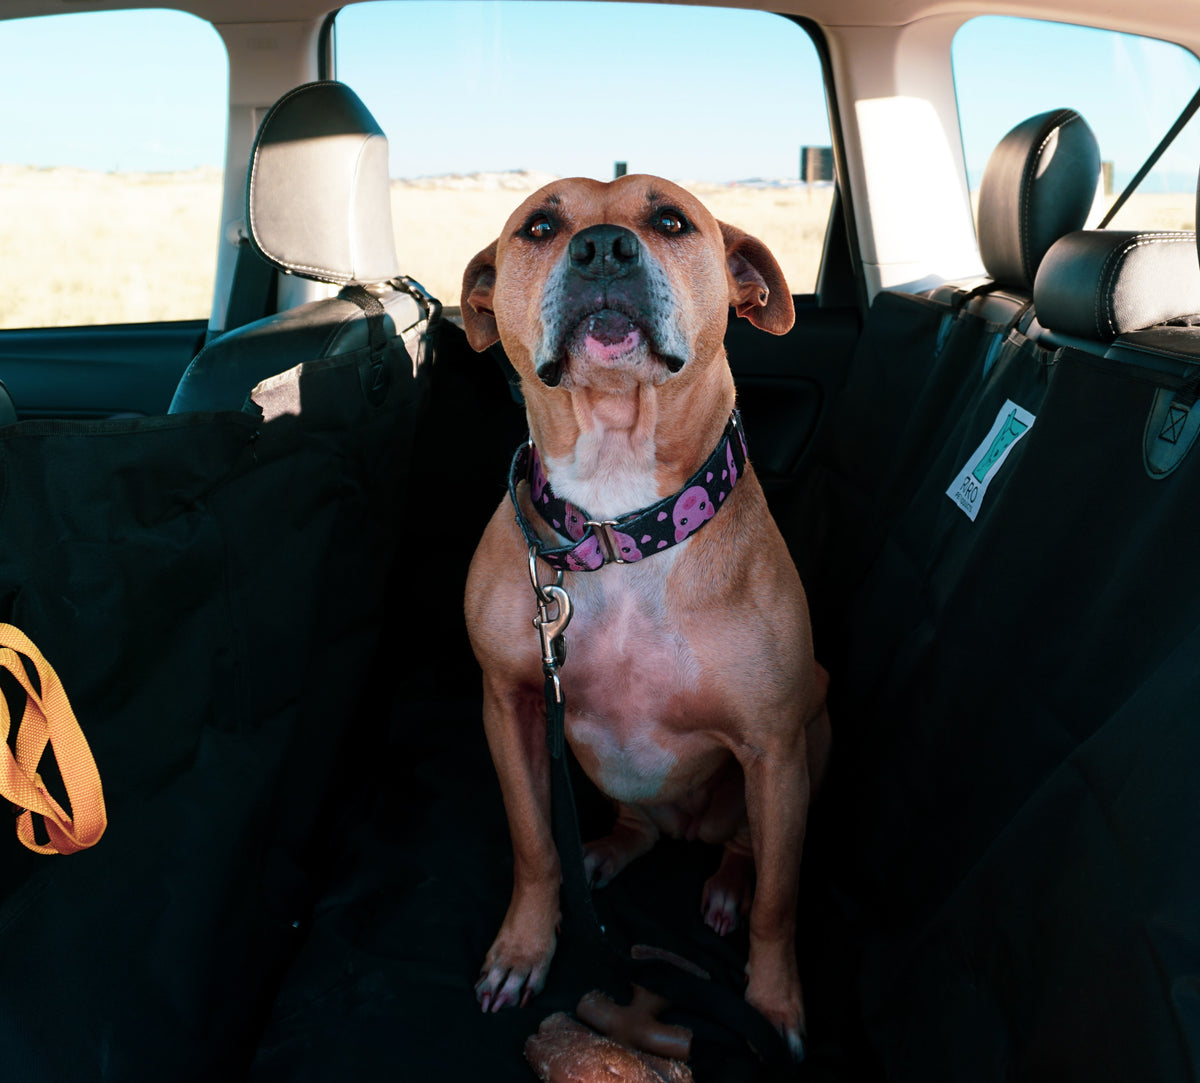 Pet Car Seat Hammock Cover - Grey – RoRo Pet Products